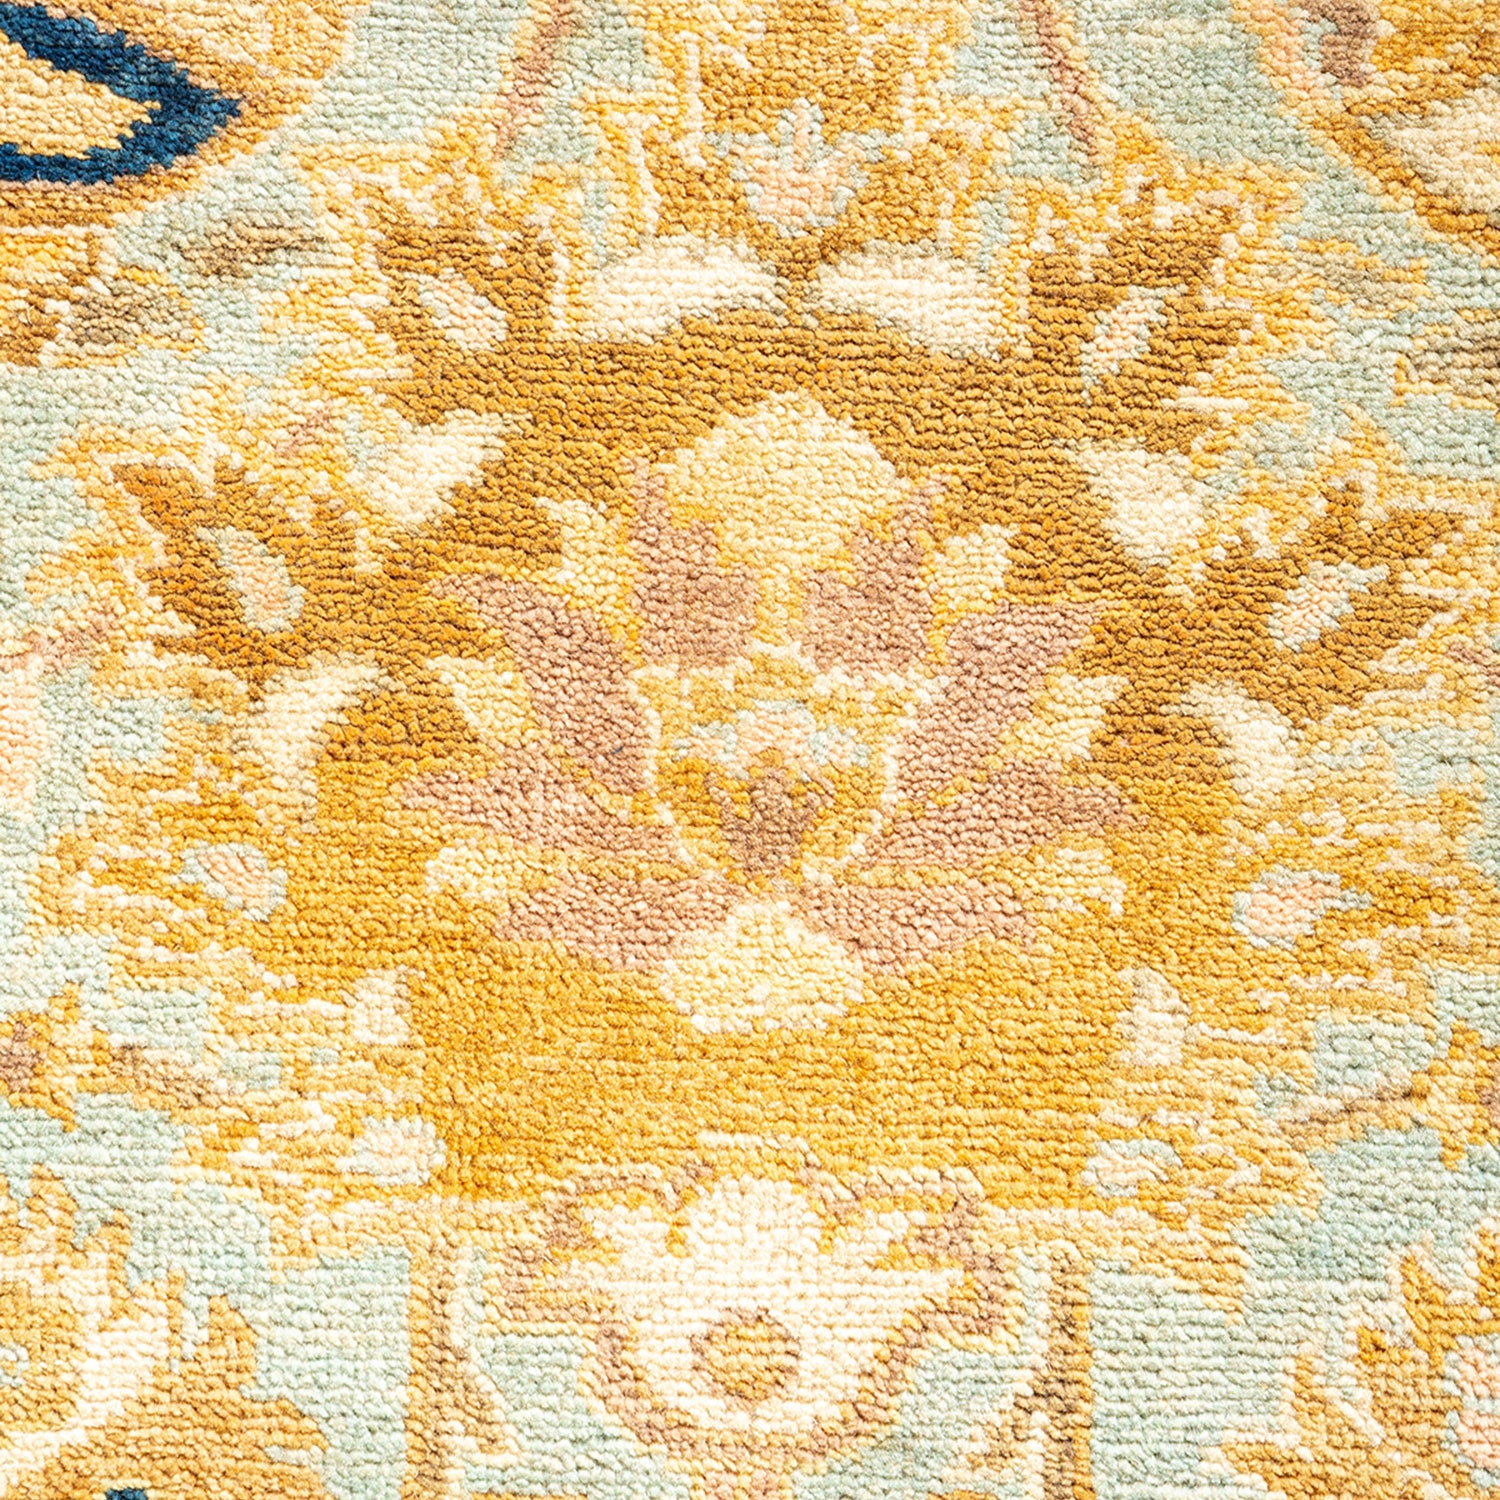 Close-up of a highly detailed, symmetrical floral rug design.